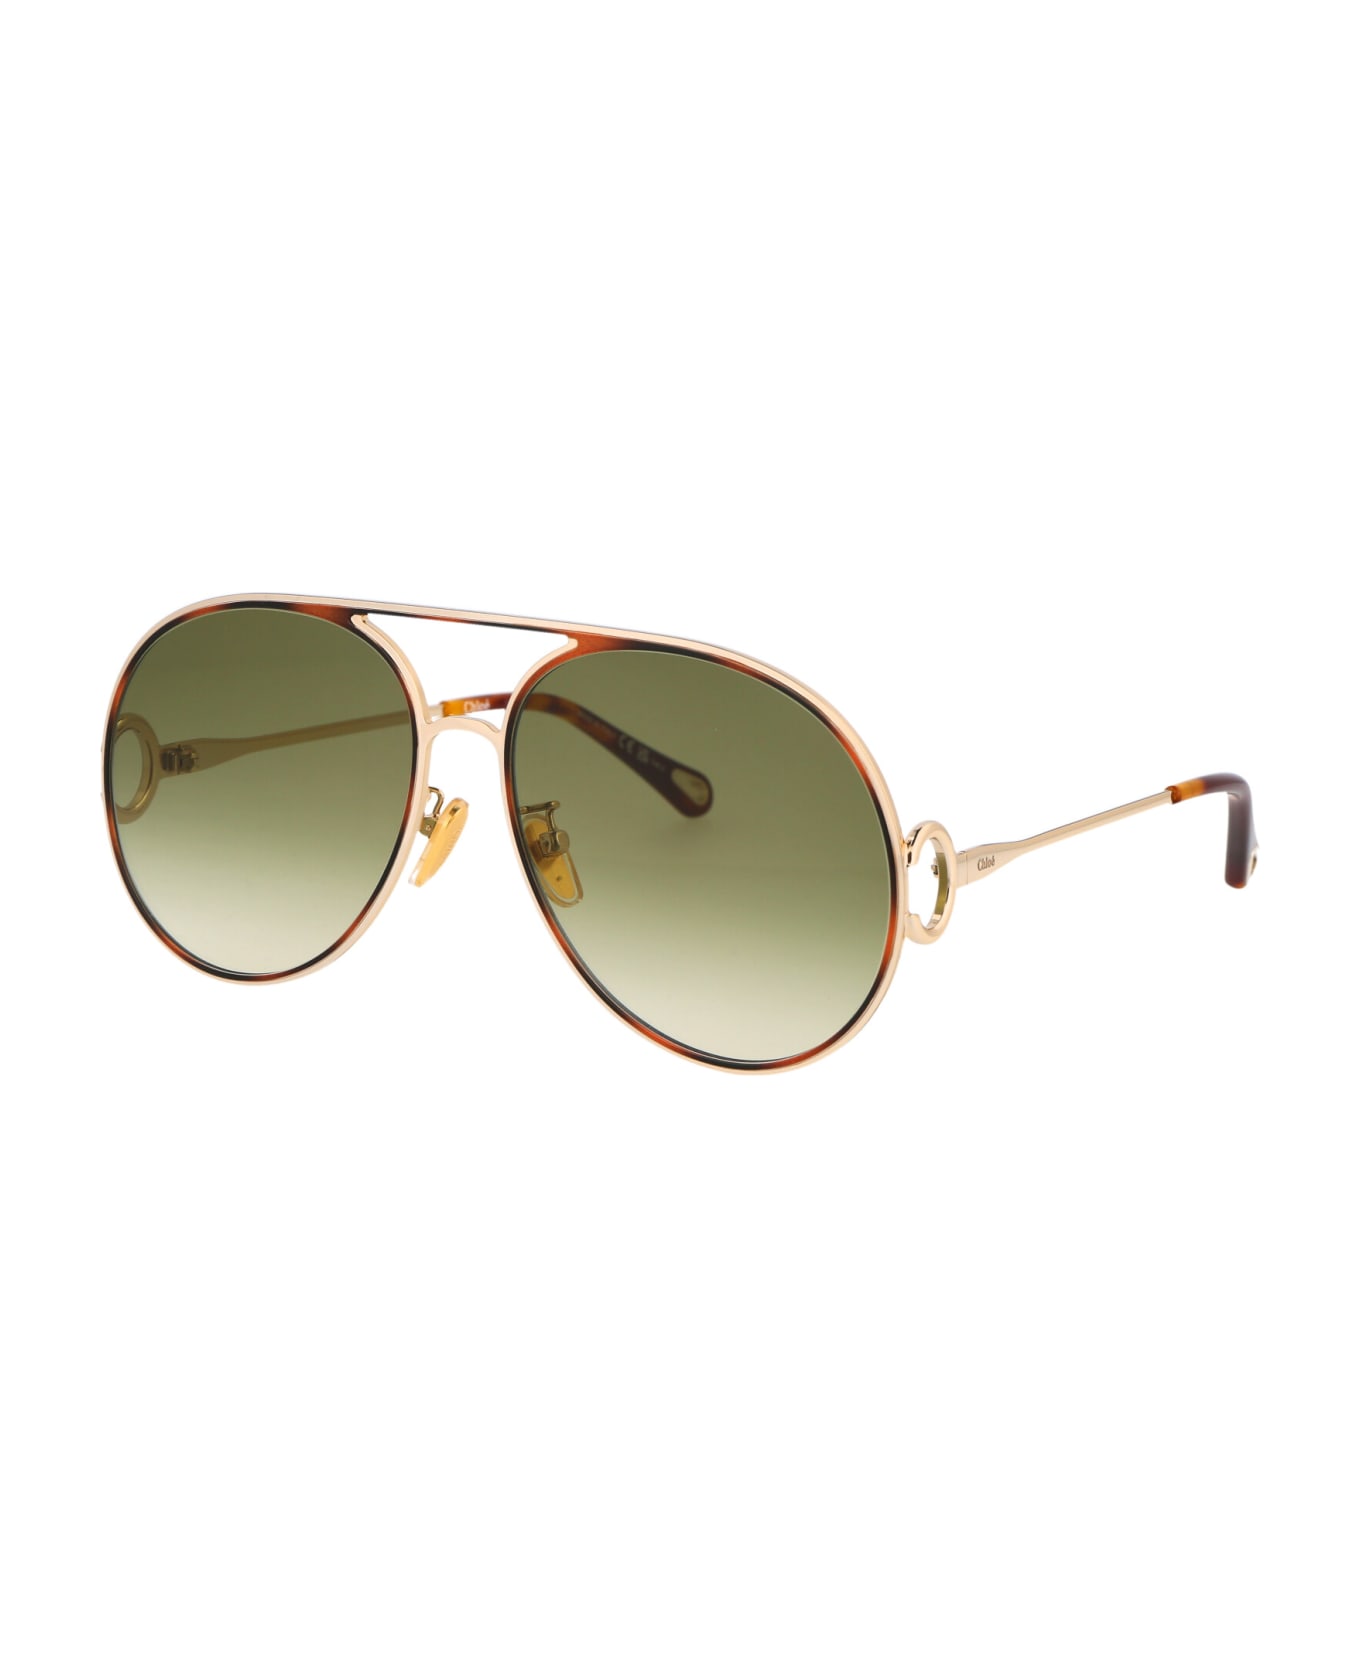 Chloé Eyewear Ch0145s Sunglasses - 002 GOLD GOLD GREEN